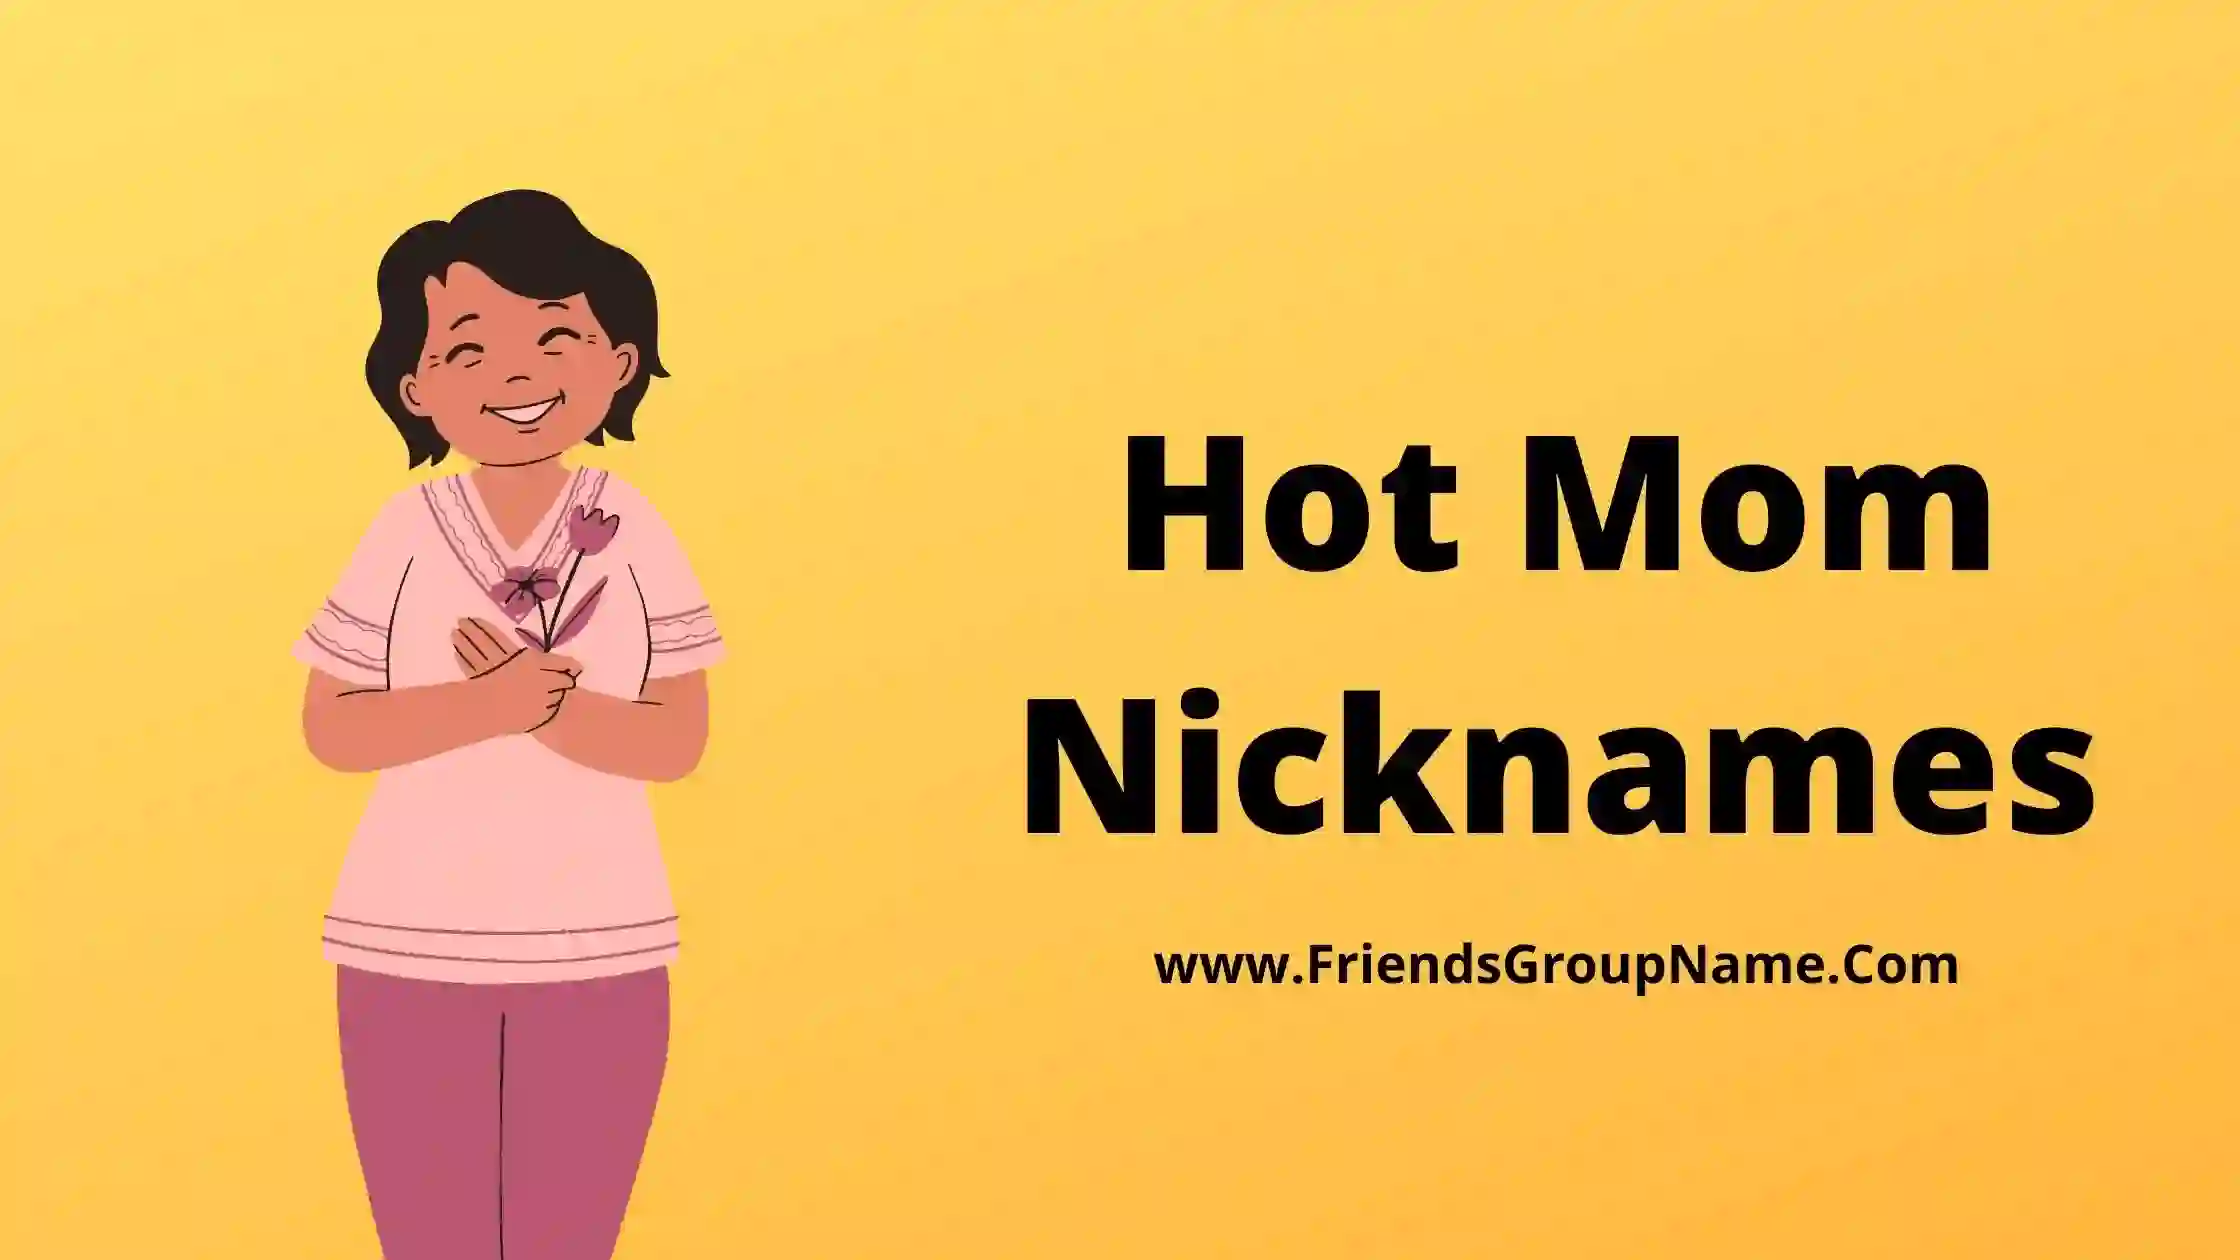 Hot Mom Nicknames